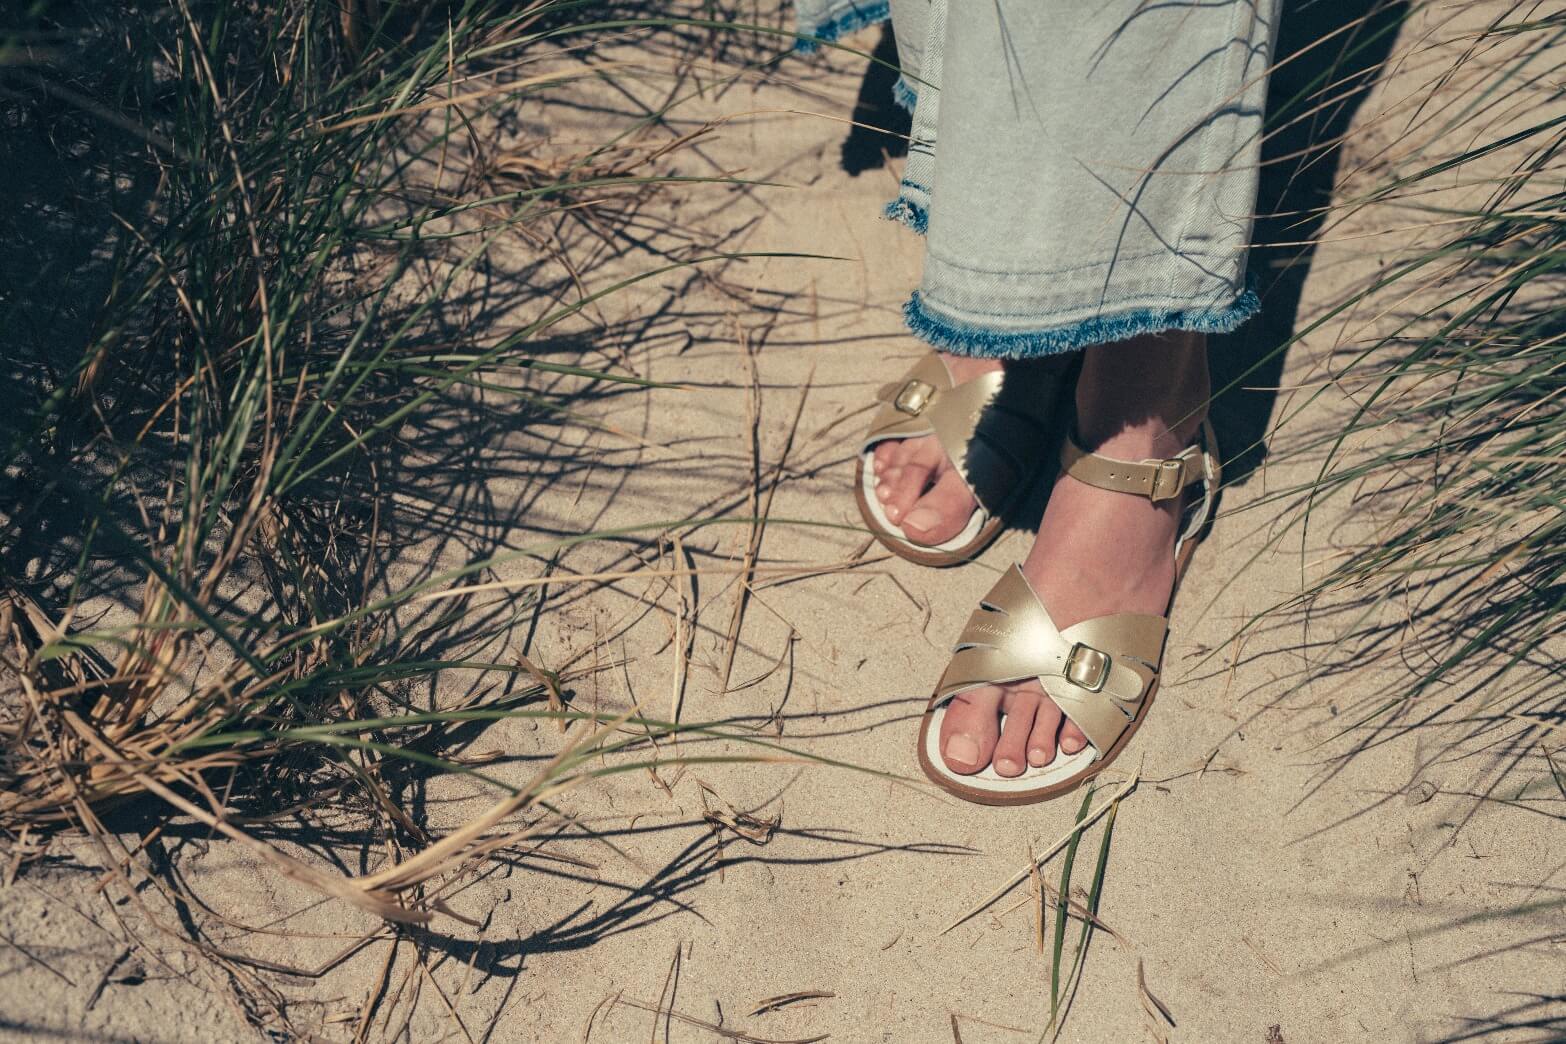 The Best Salt-Water Sandals for Walking - Comfortable Sandals